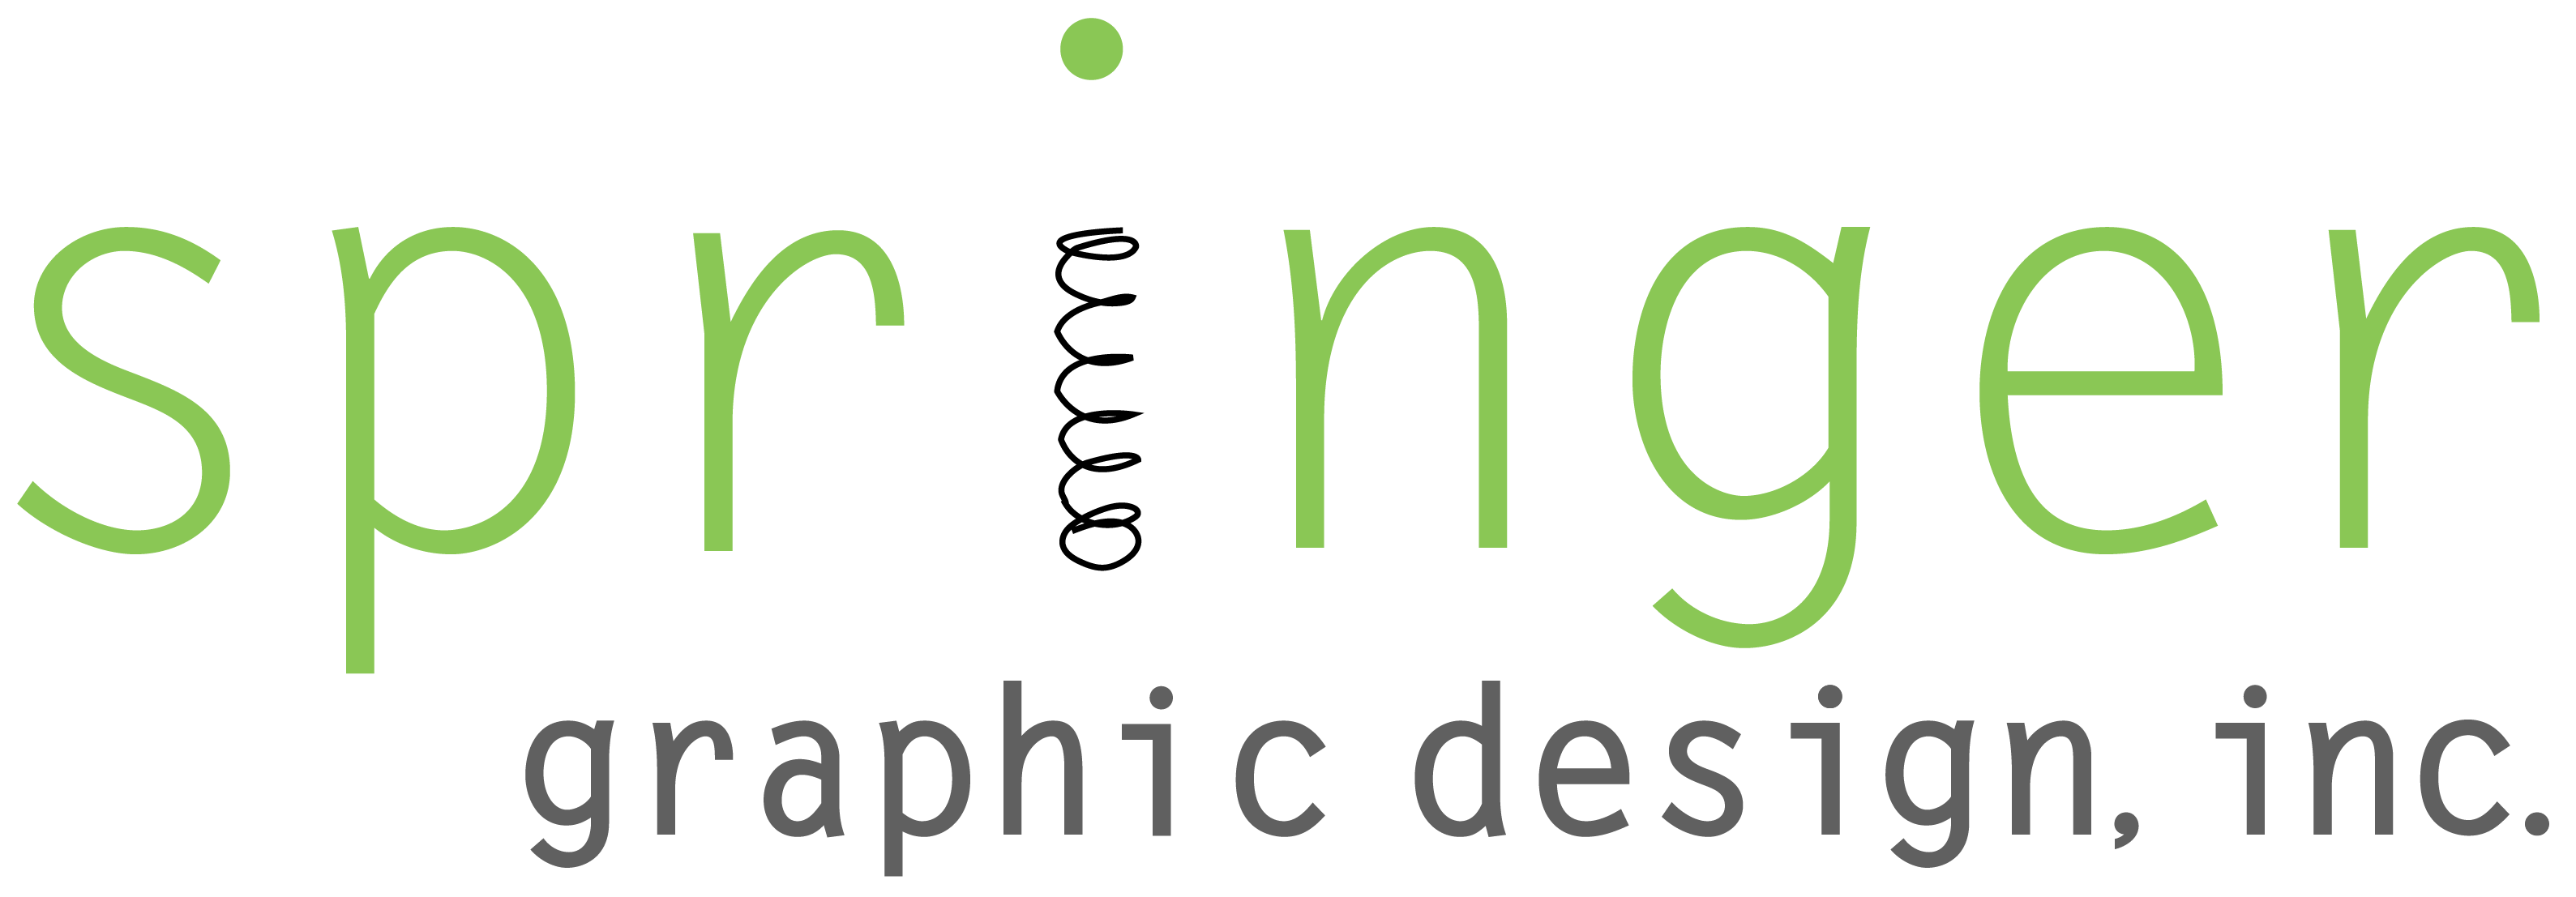 Graphic Design Agency in San Diego | Springer Graphic Design